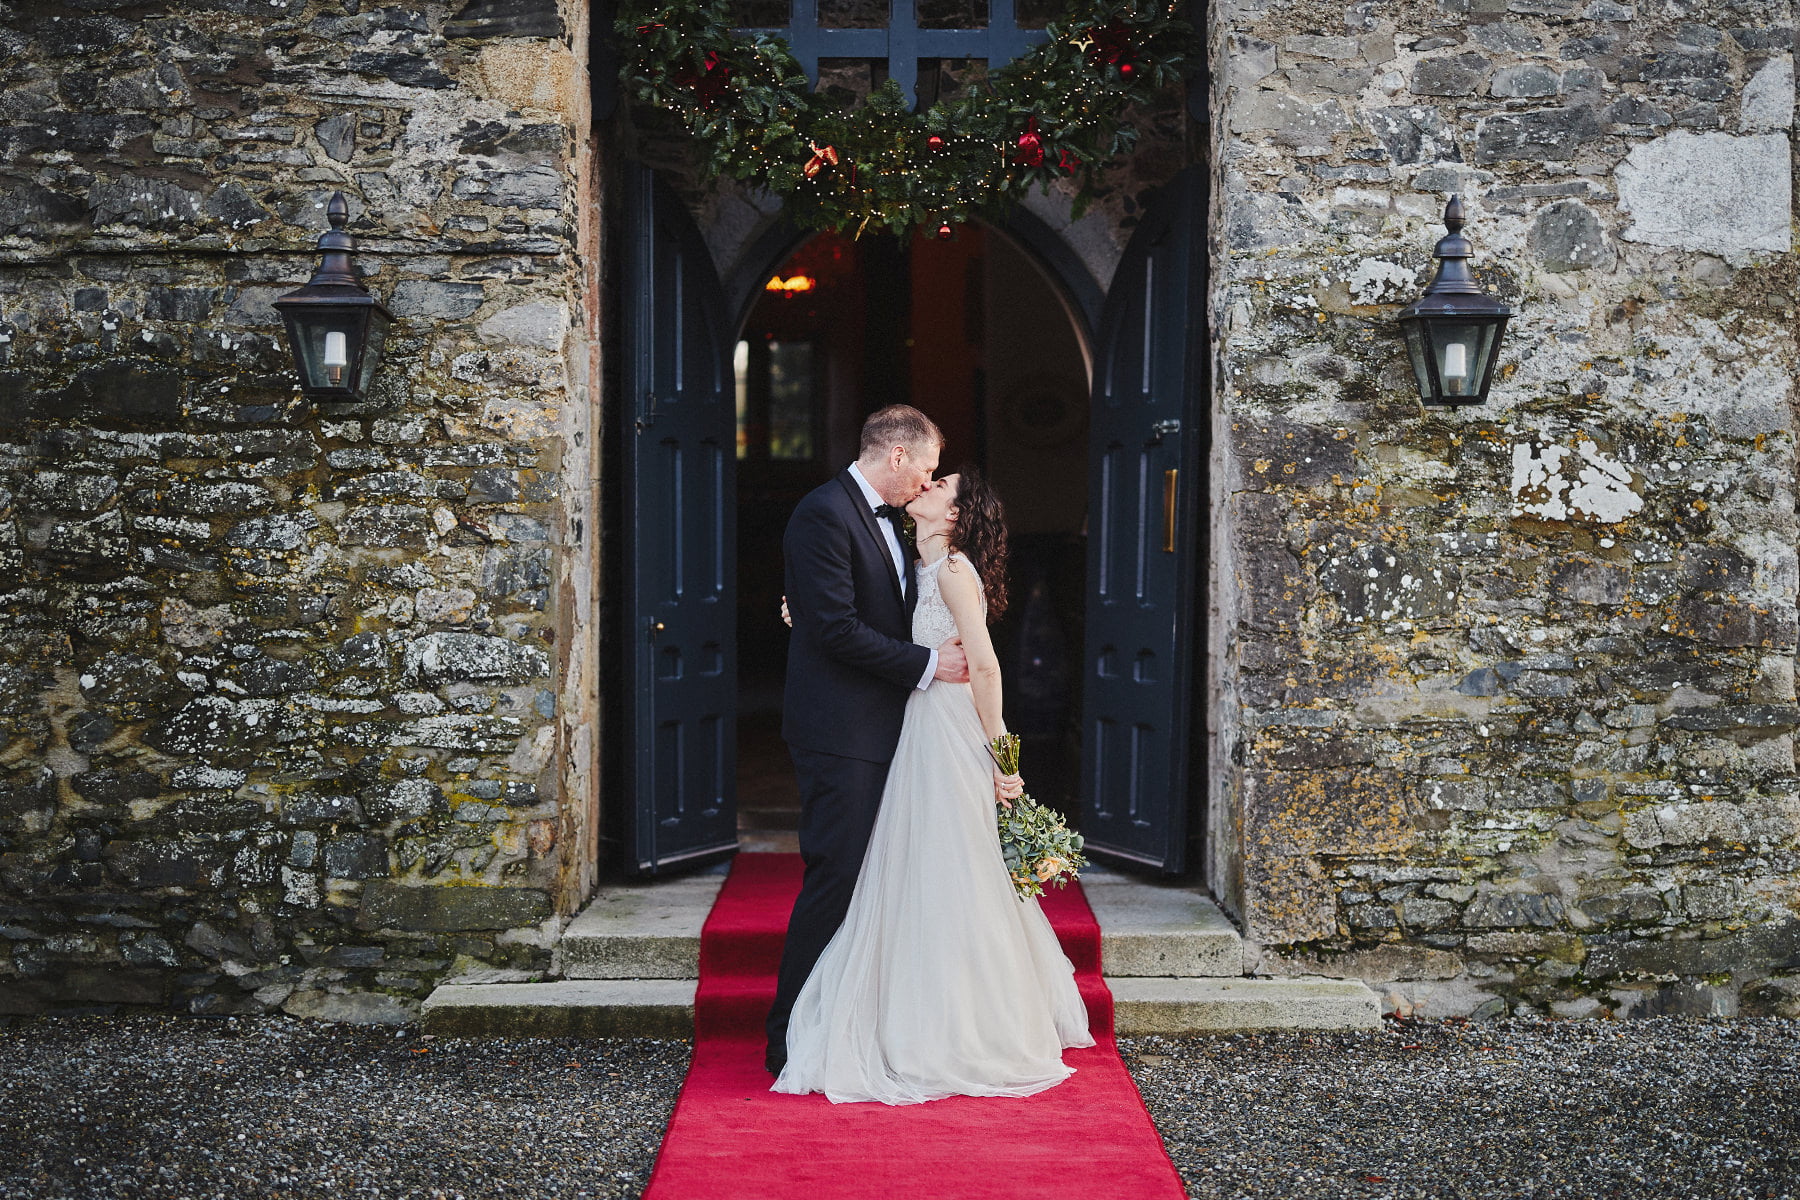 Kilkea Castle – The perfect Fairytale Wedding Venue 16